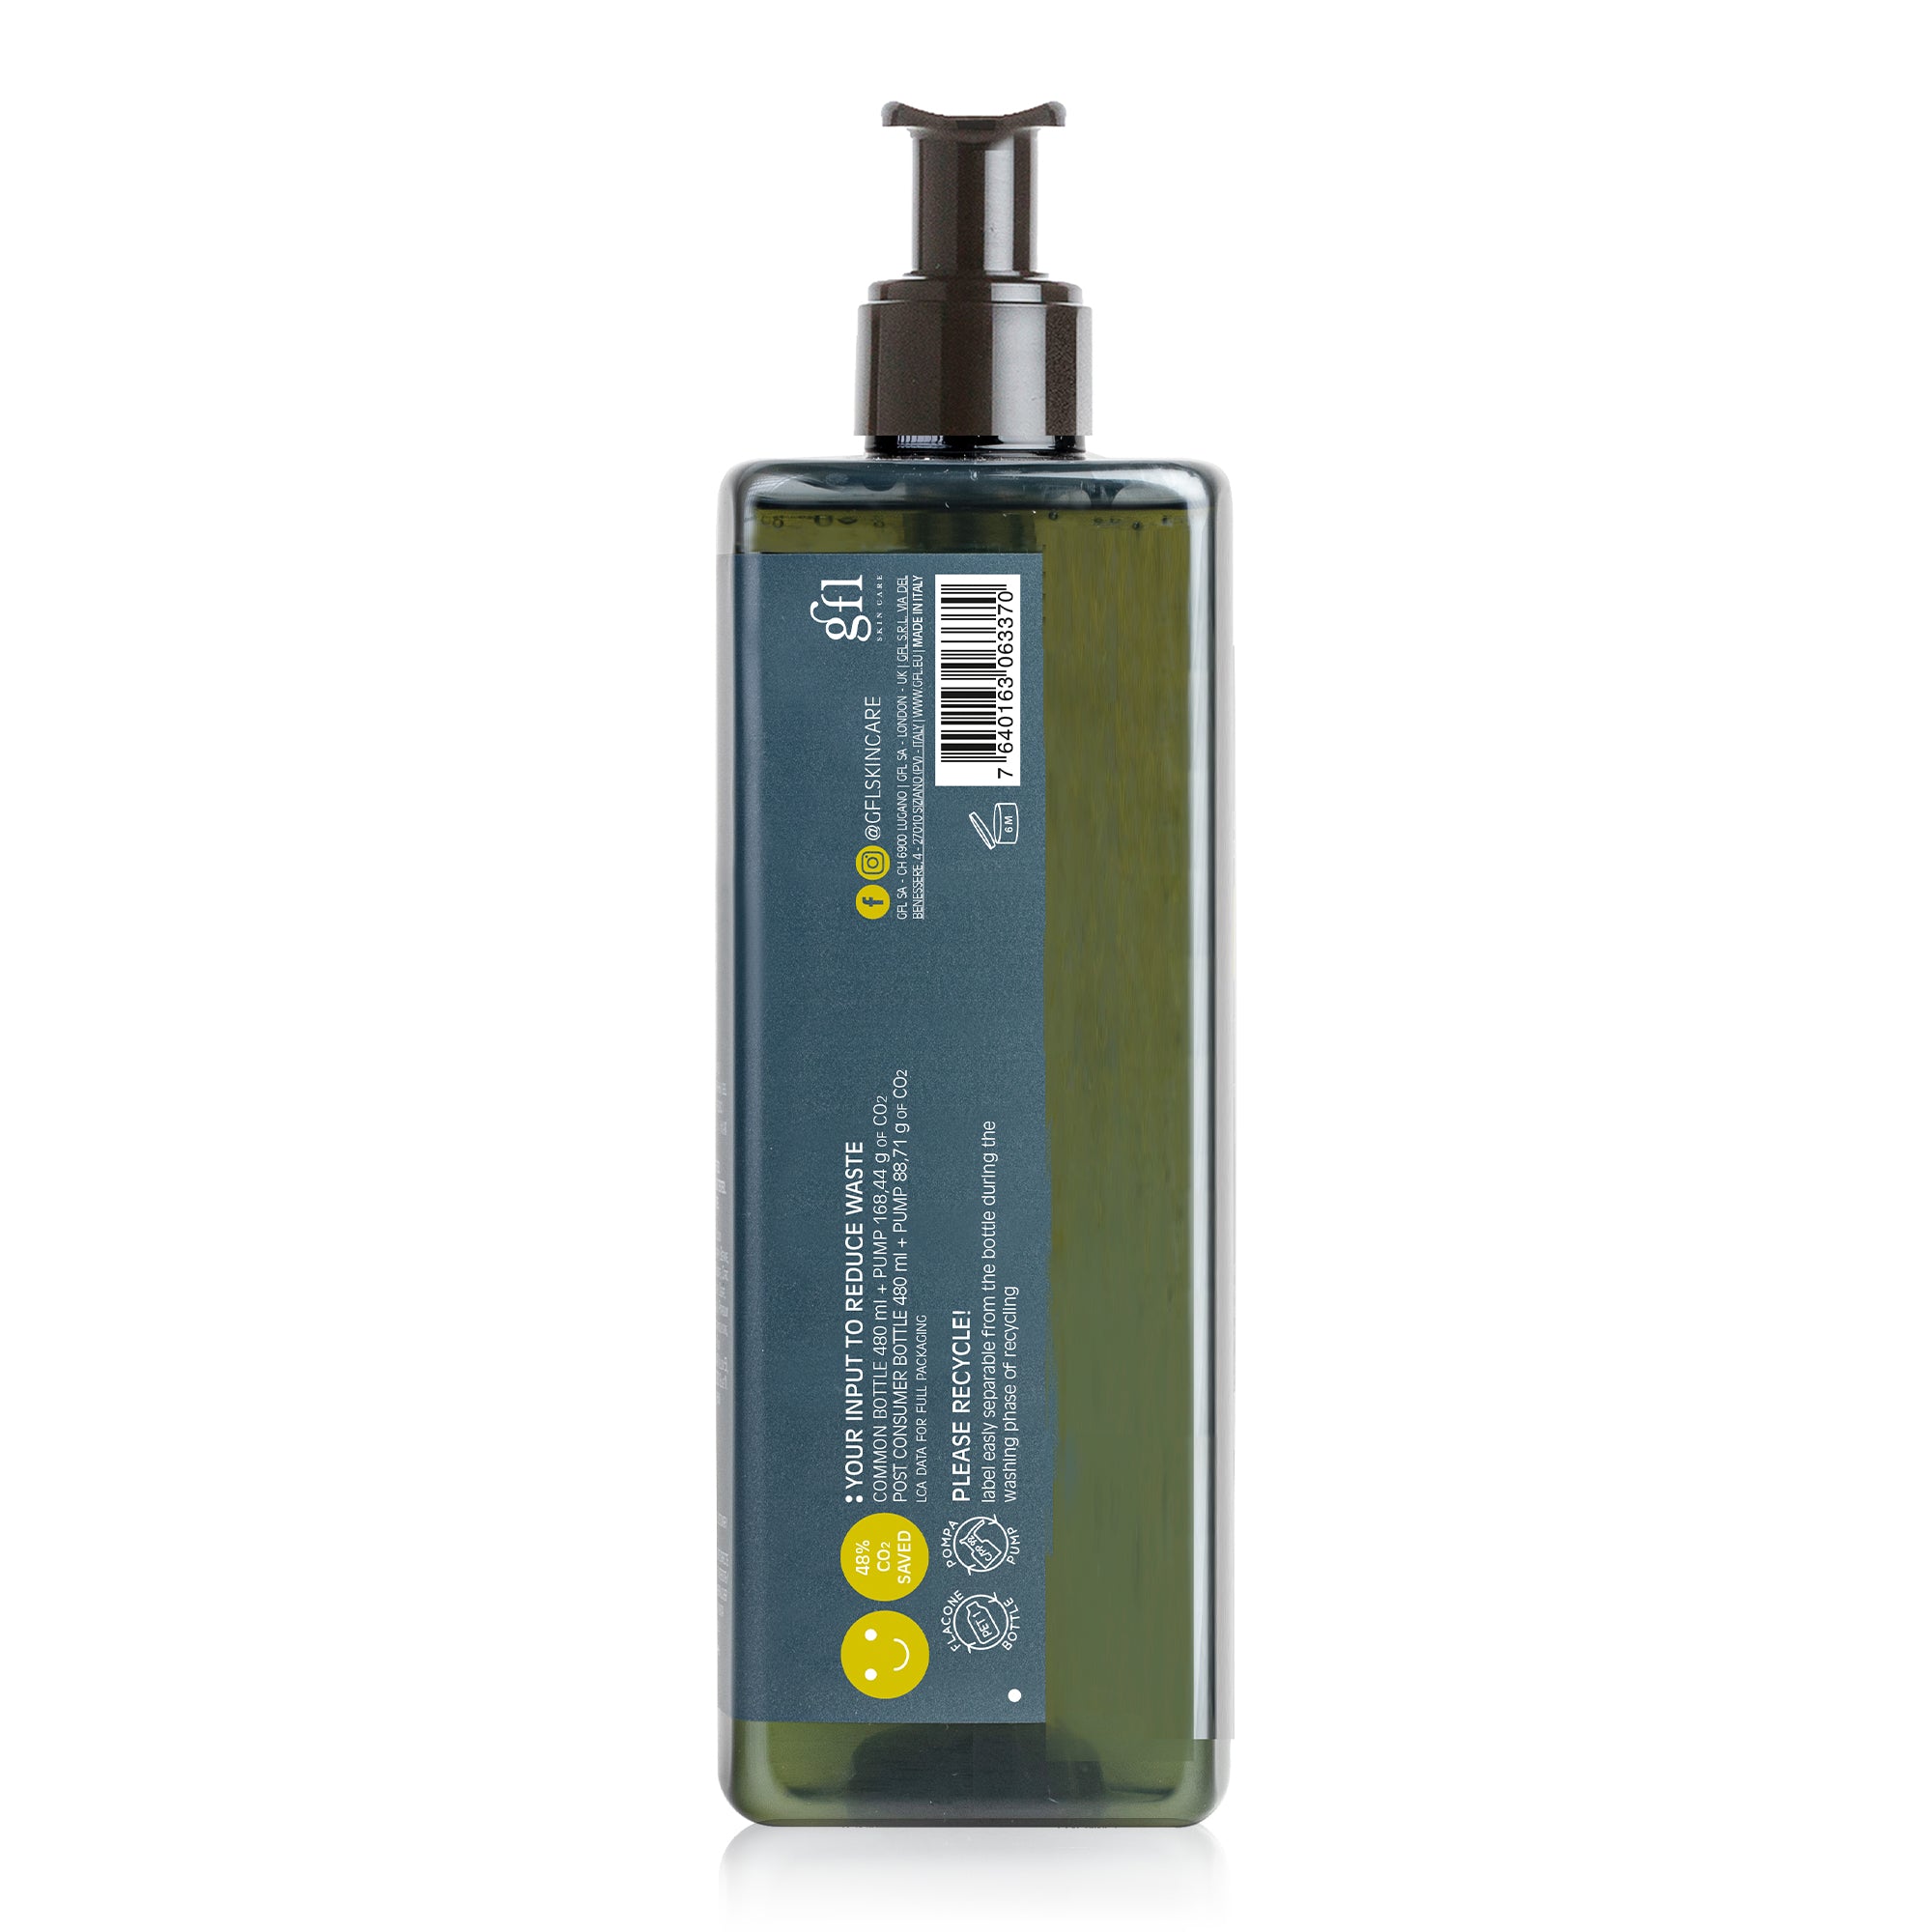 Anyah Gentle Hair & Body Wash Ecolabel Certified details(480 ml)